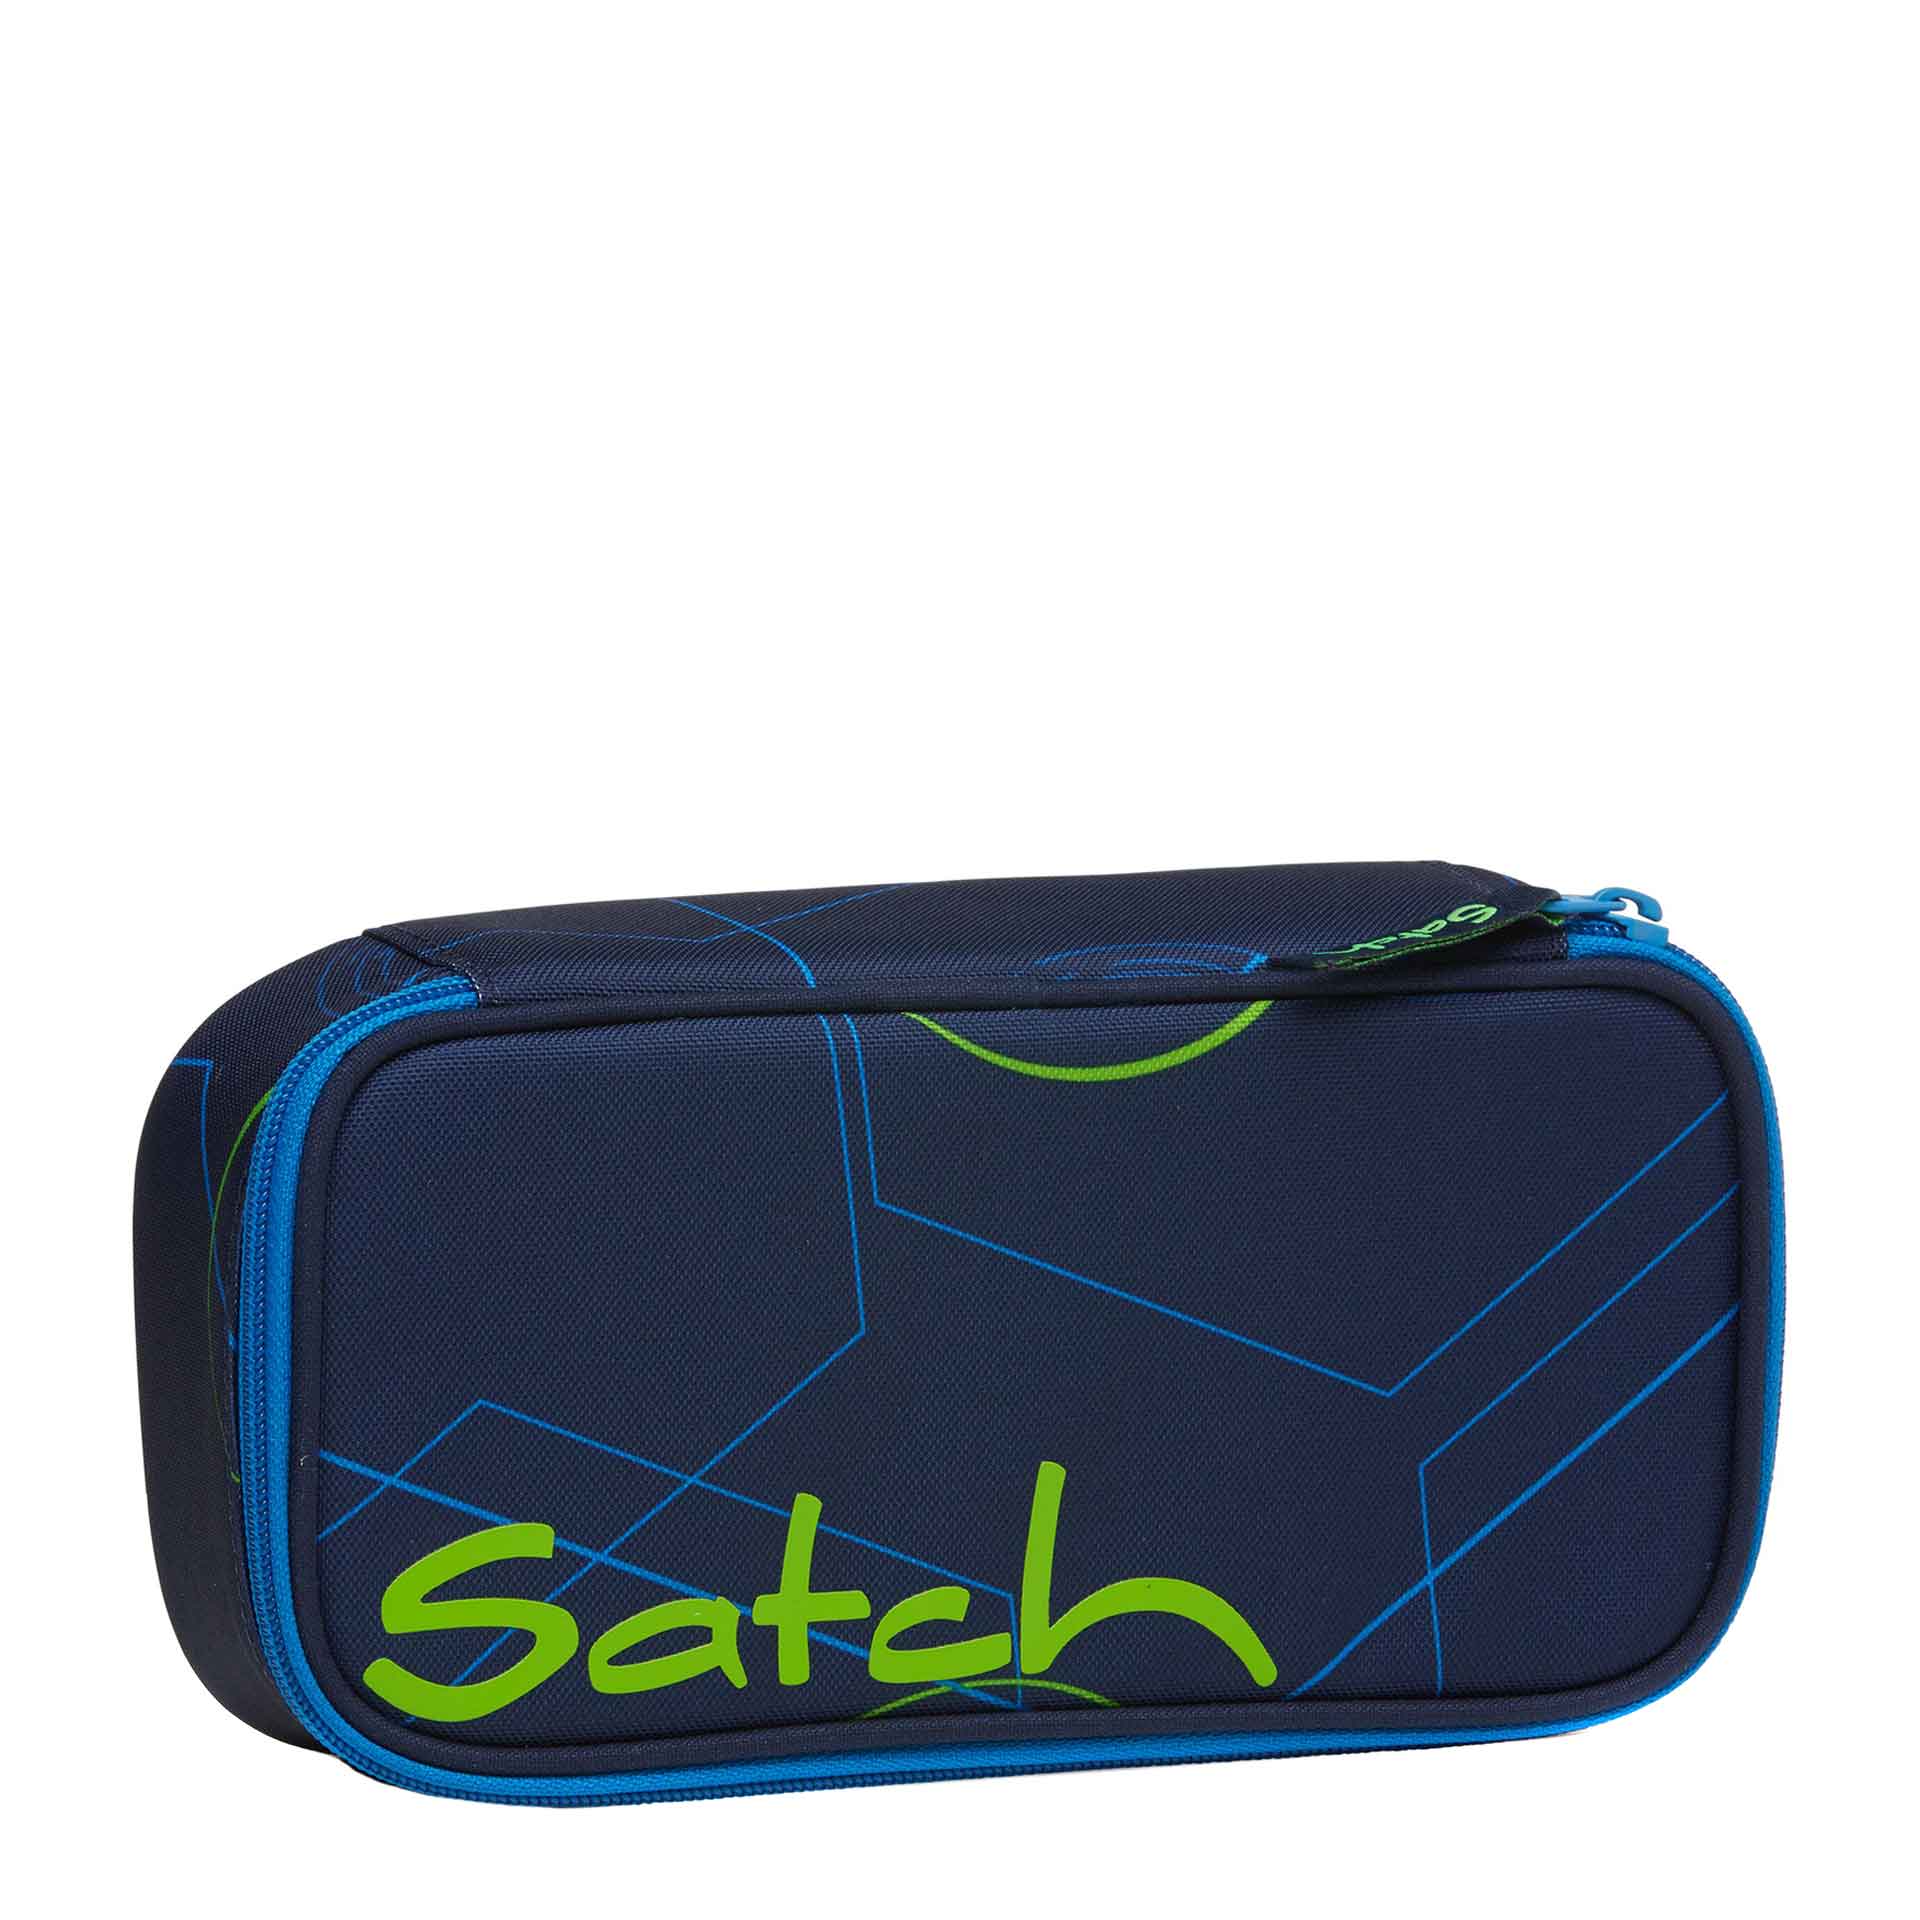 Satch Schlamperbox blue tech